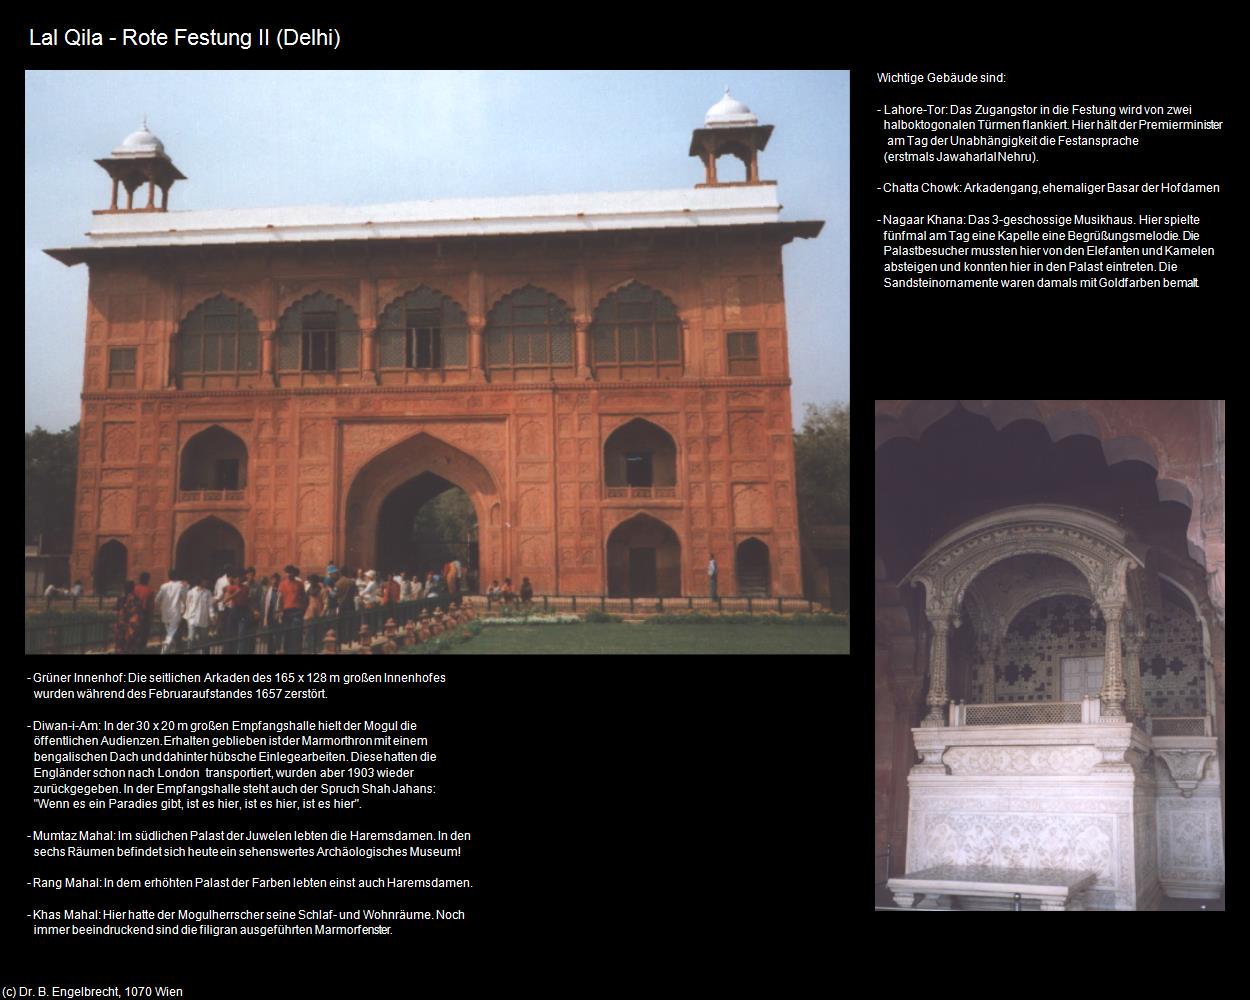 Lal Qila - Rote Festung II (Delhi) in Rajasthan - das Land der Könige